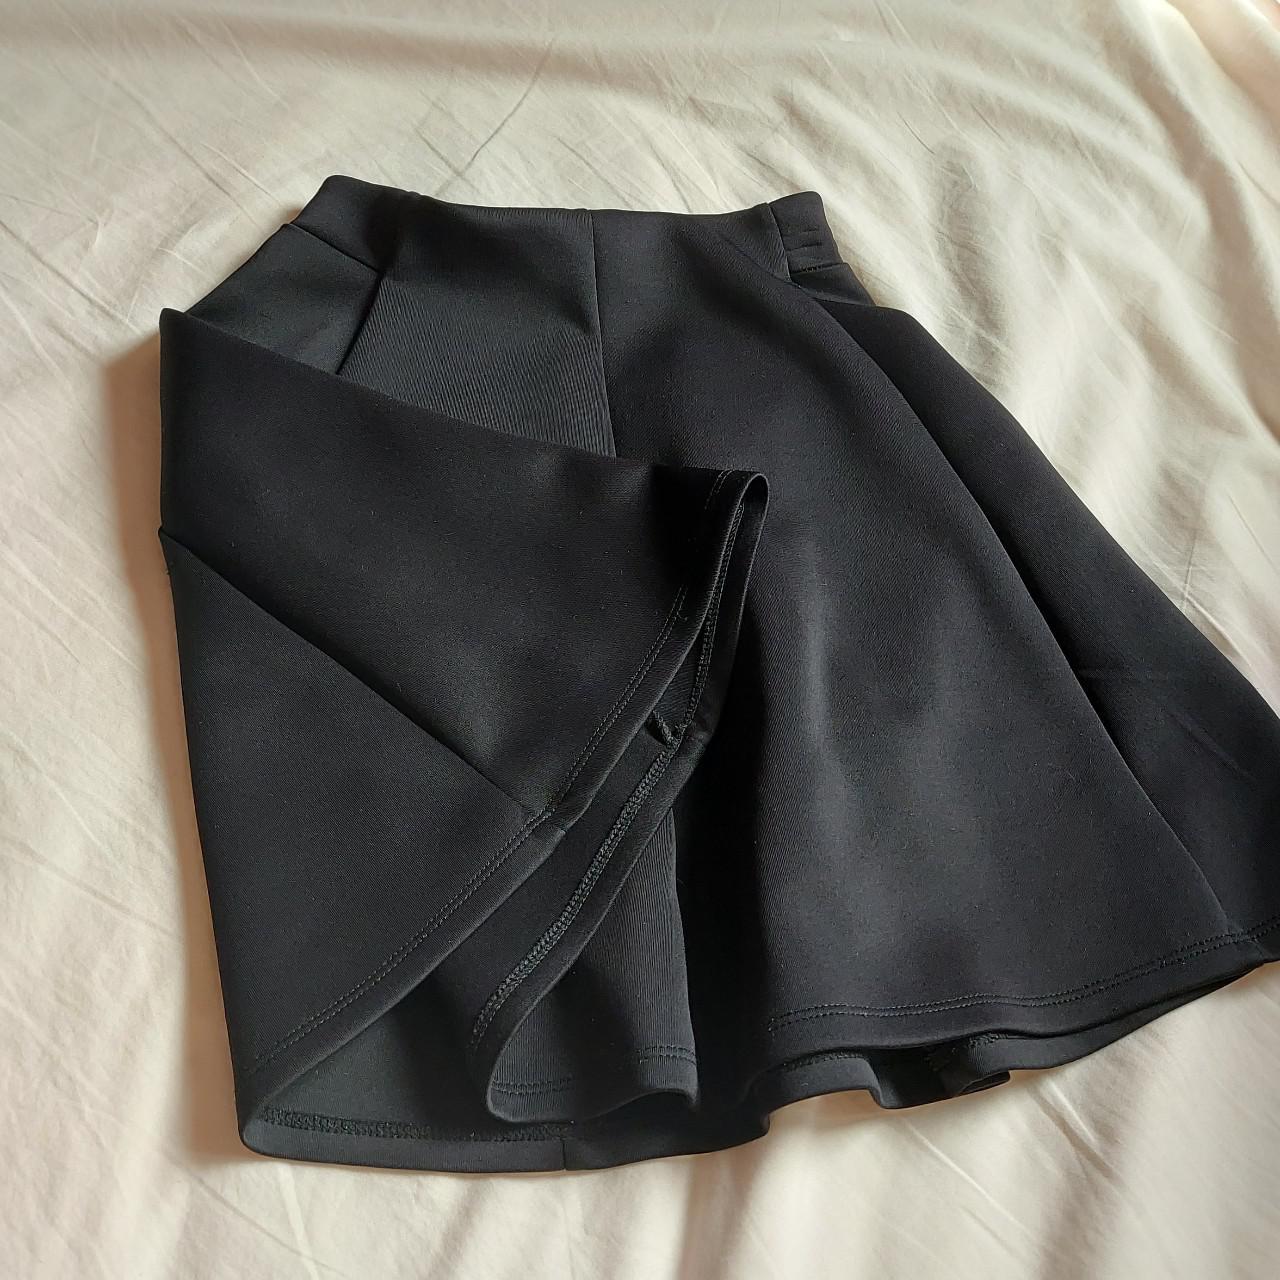 Product Image 2 - Simple black Decree skirt size